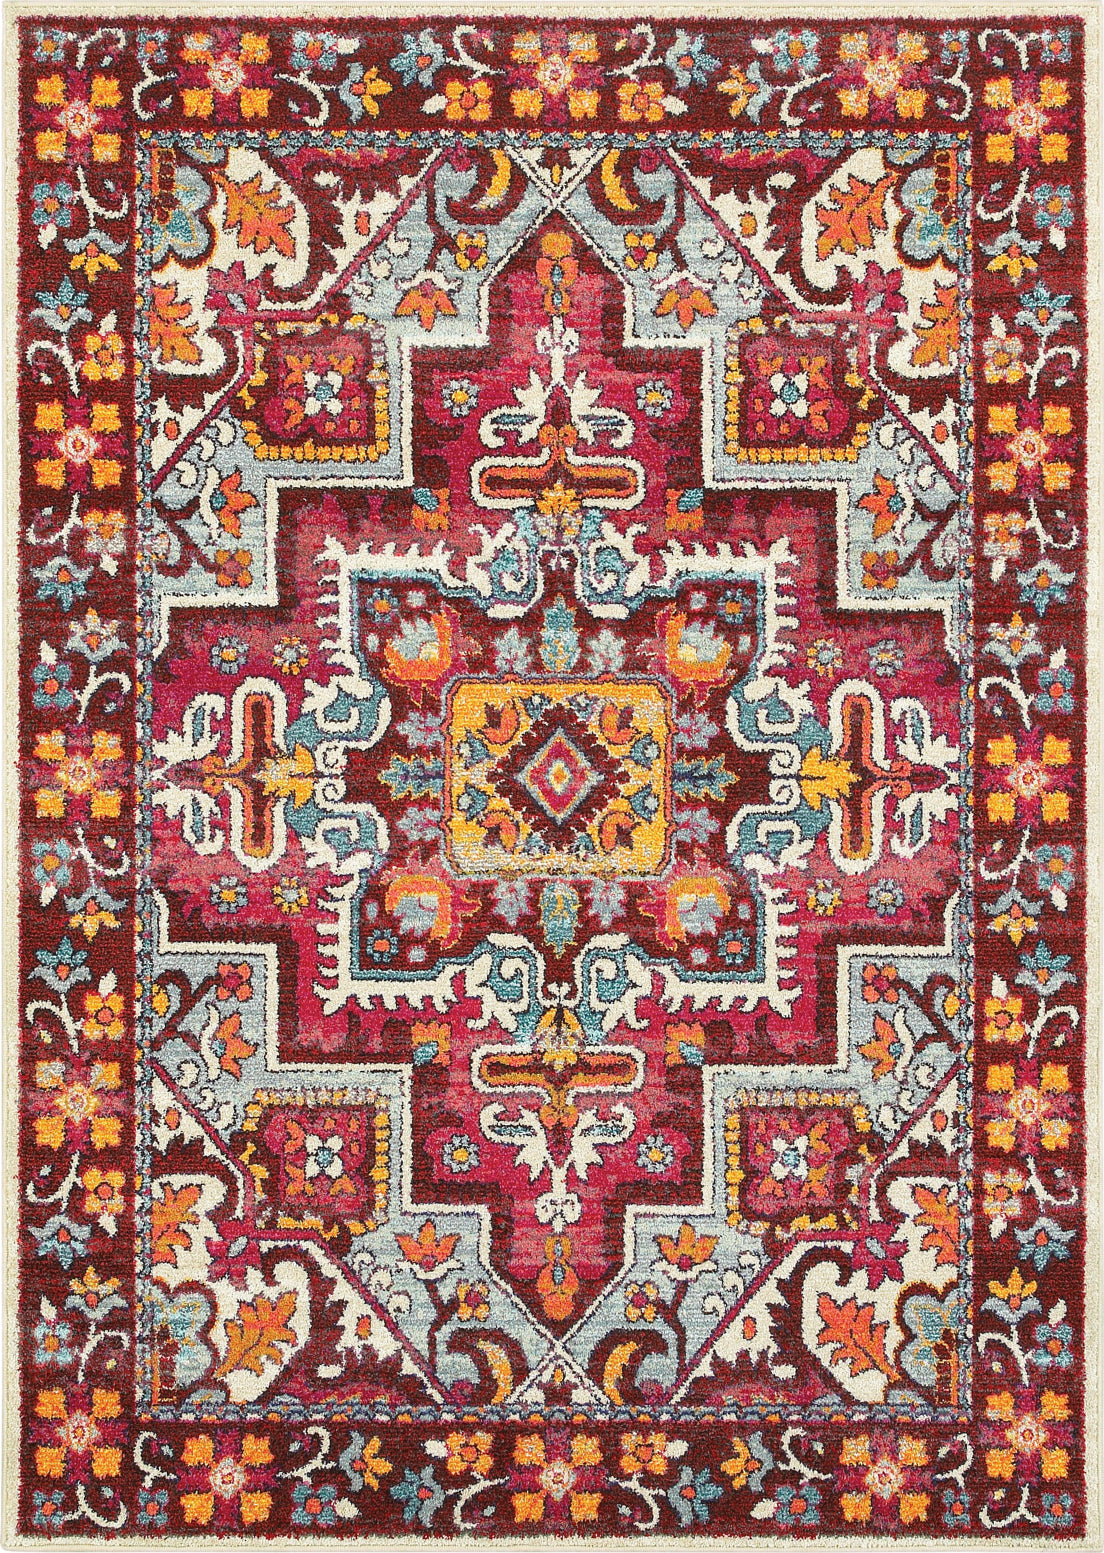 Oriental Weavers Bohemian 5330R Red/ Pink Area Rug main image